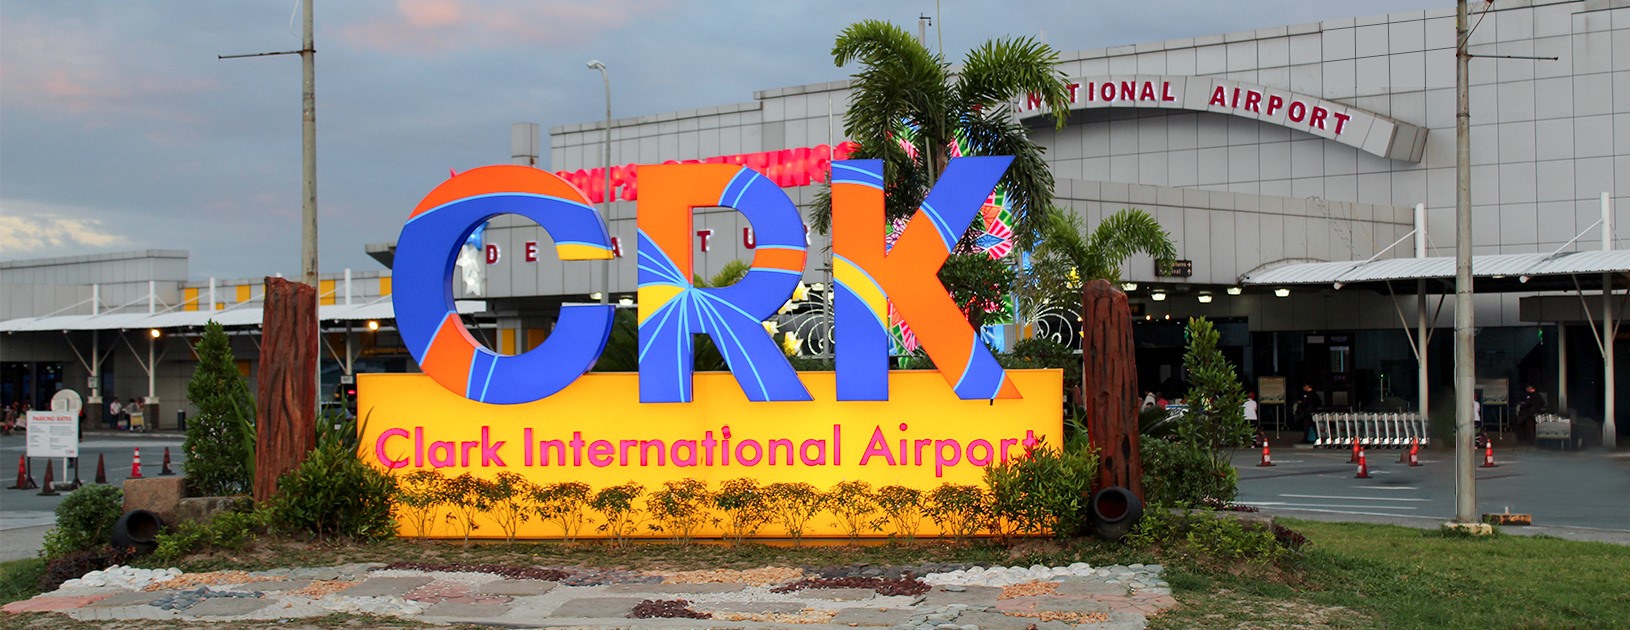 clarks international airport